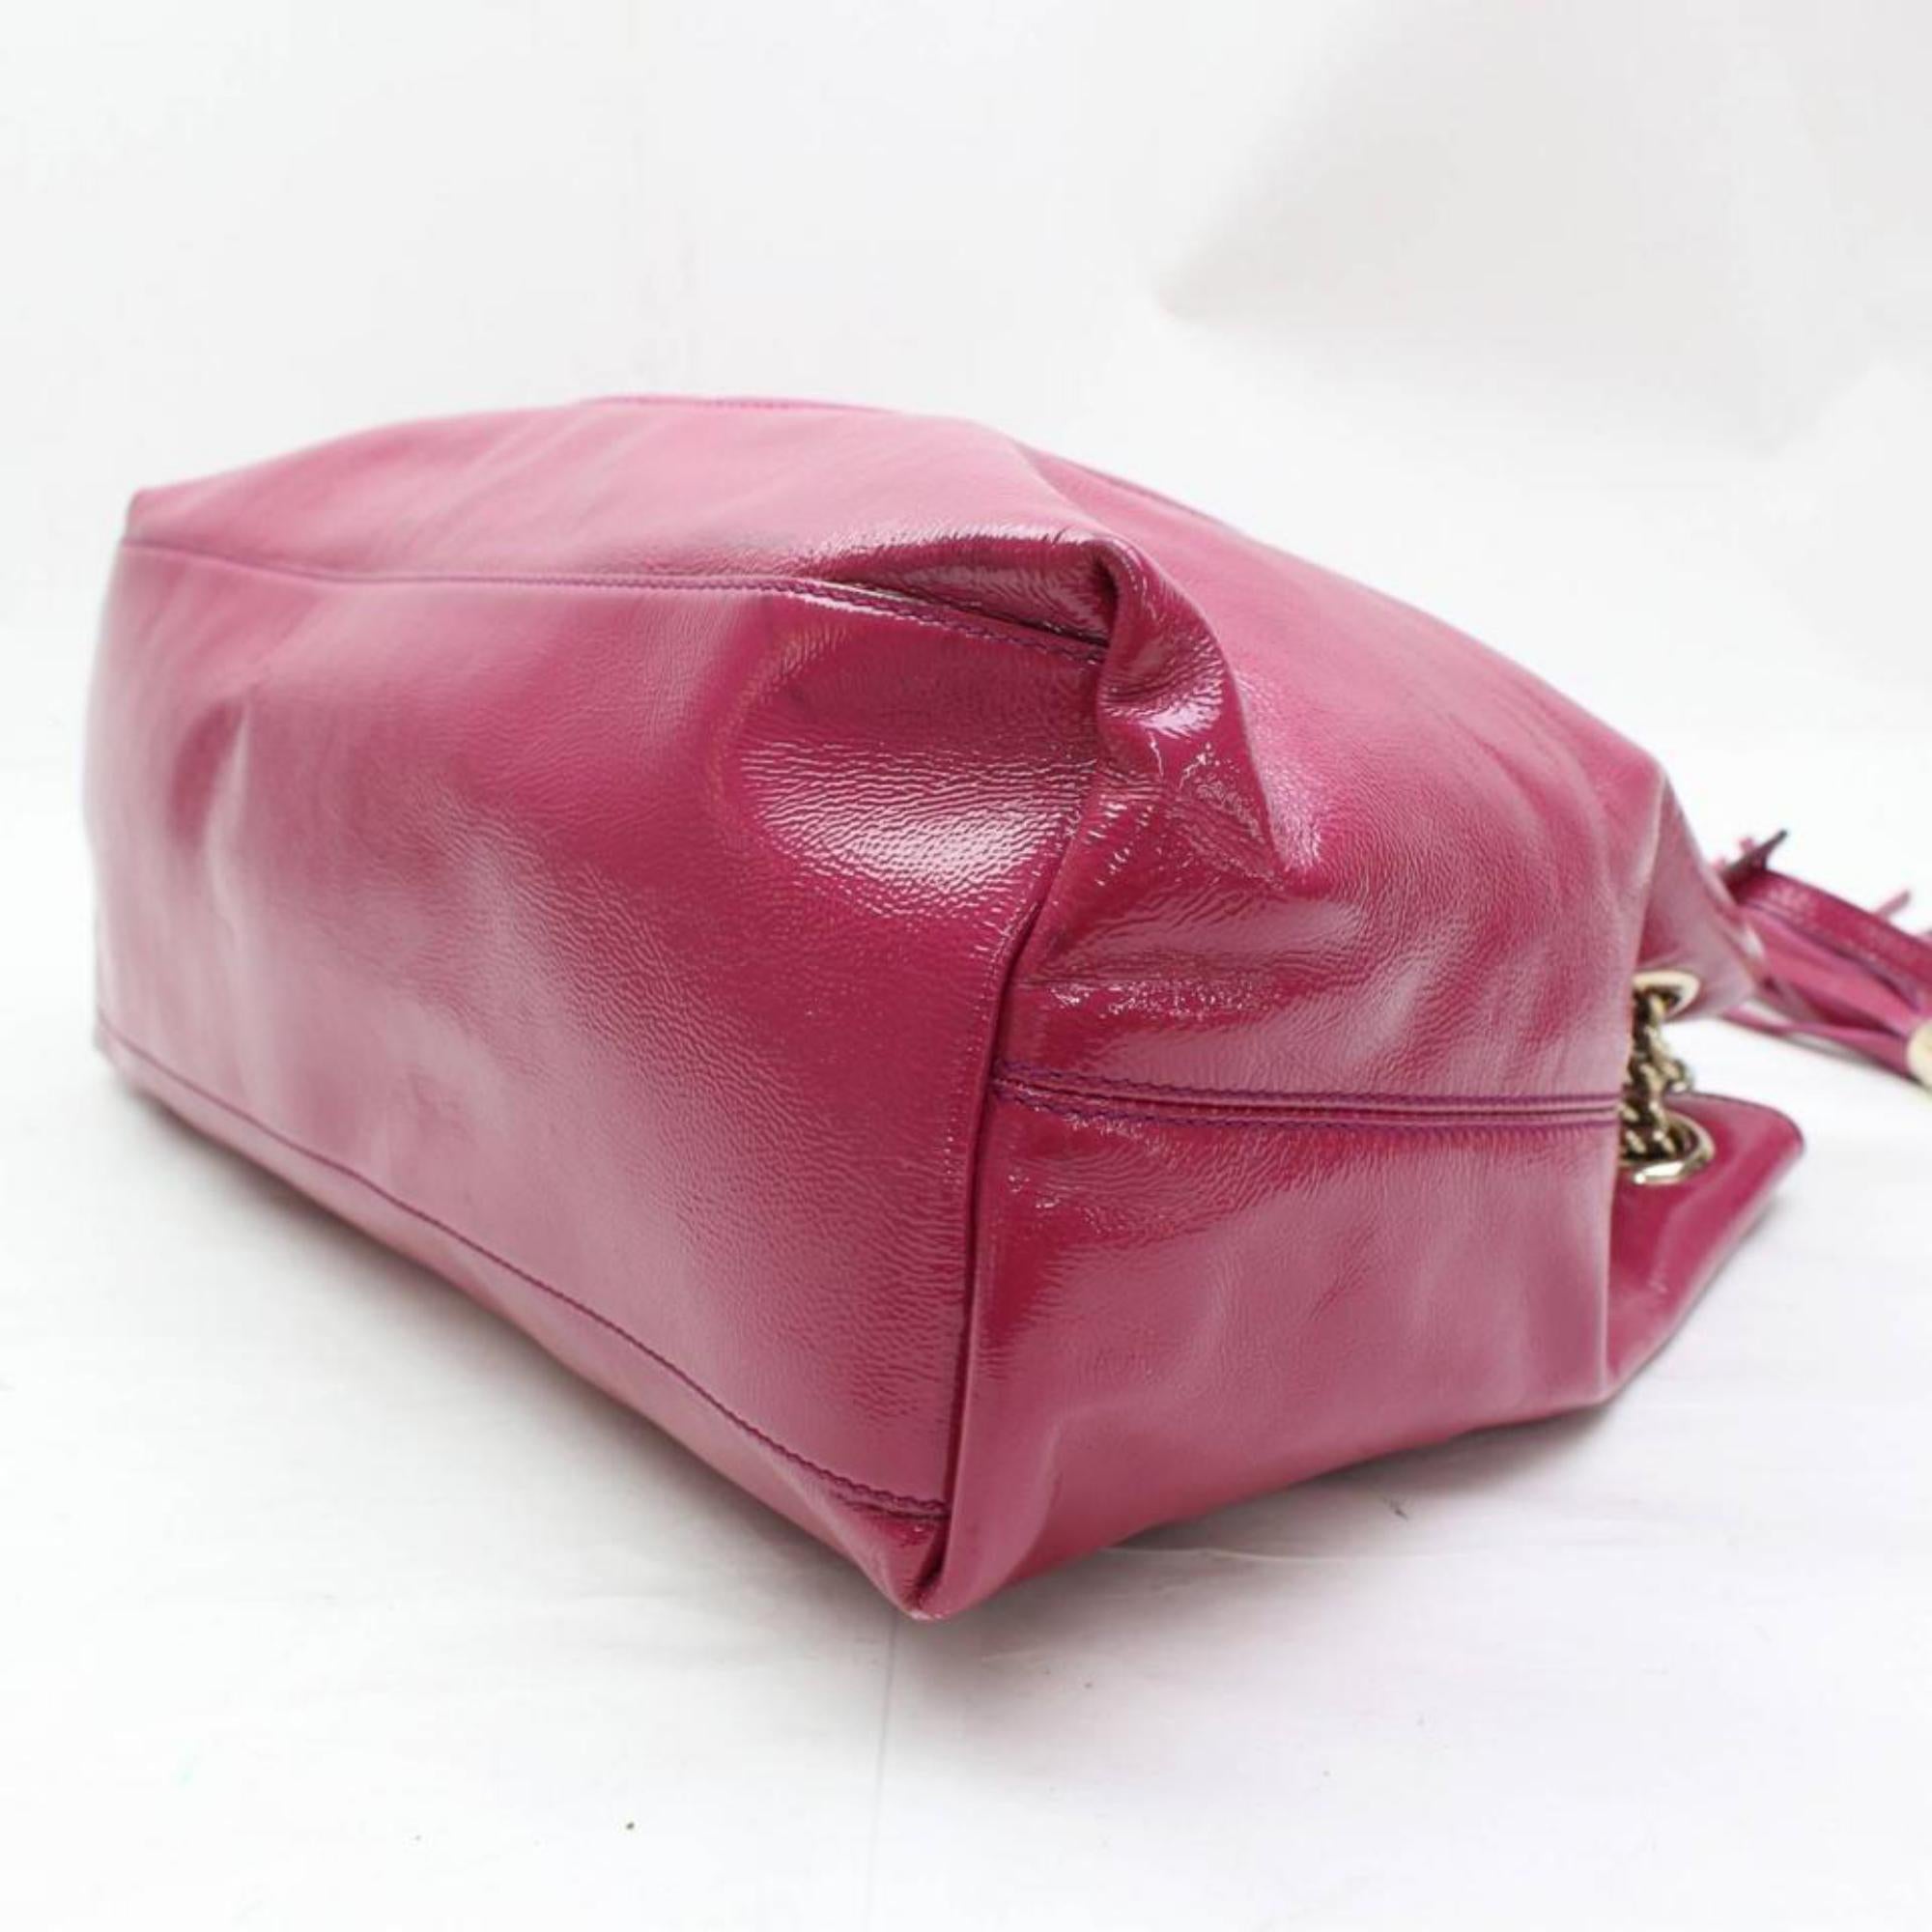 Gucci Soho Chain Tote 867472 Fuchsia Patent Leather Shoulder Bag For Sale 2